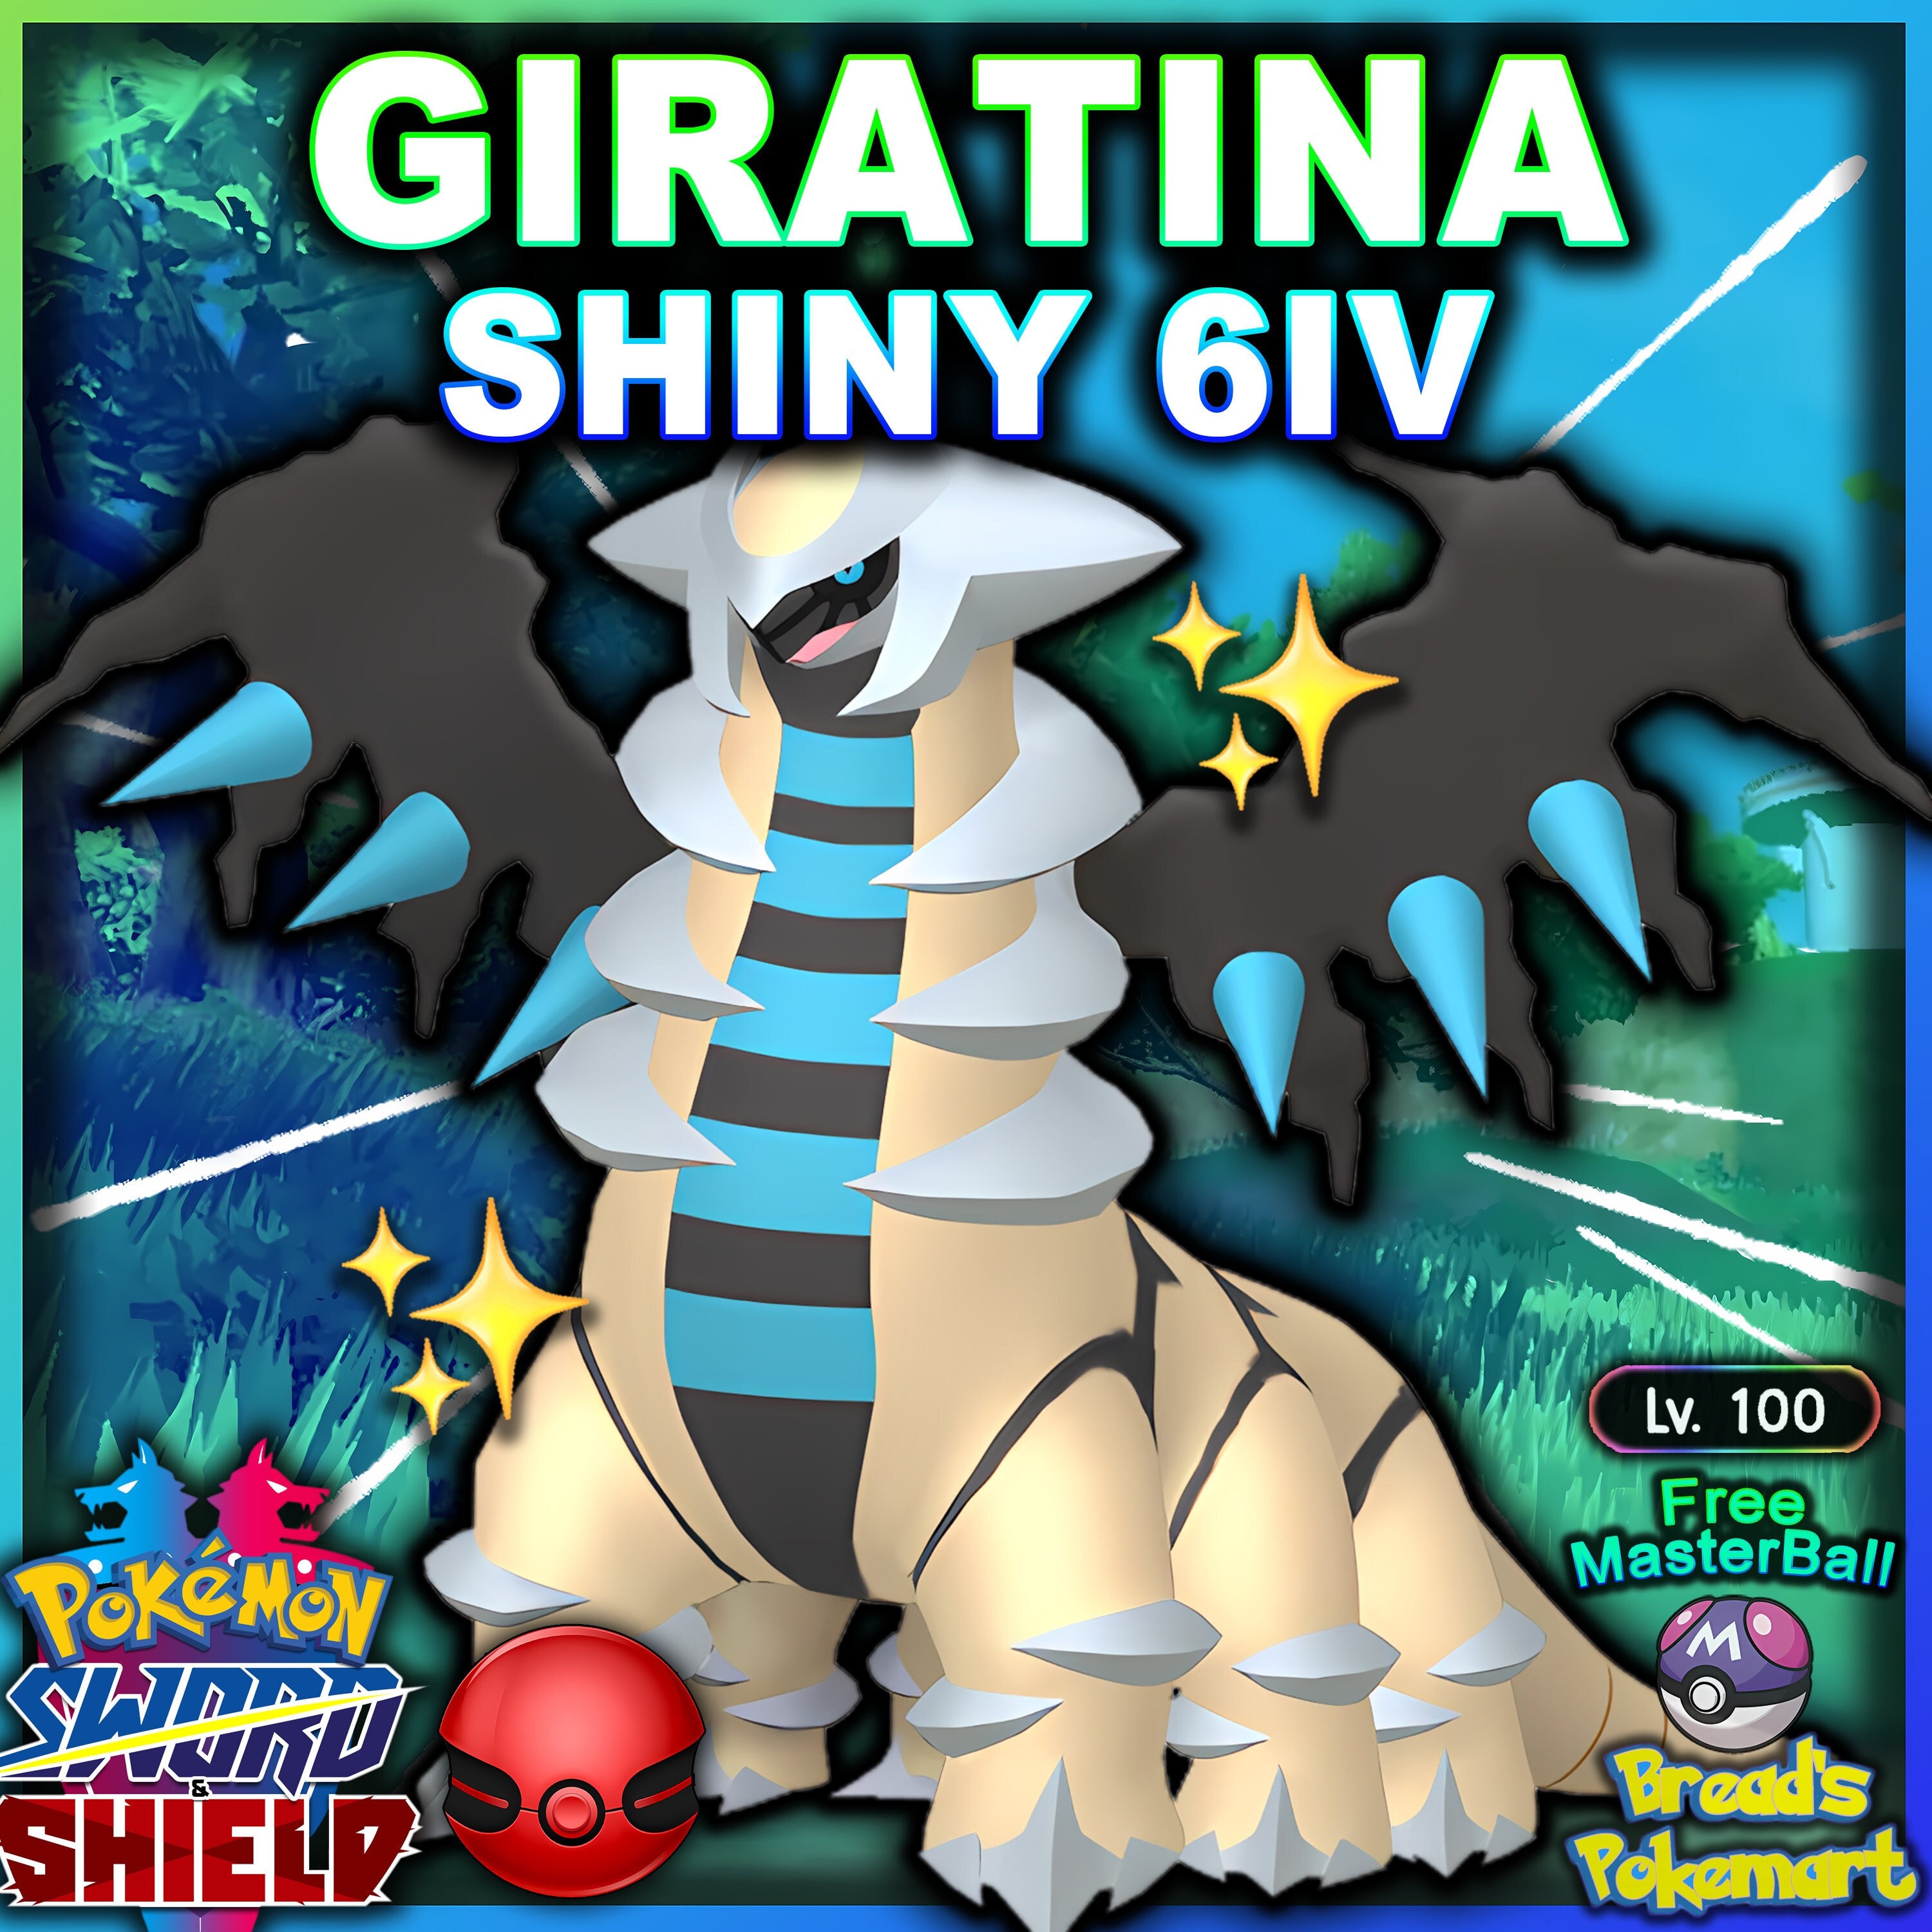 Pokemon Sword and Shield Player Pays Steep Price for Shiny Giratina